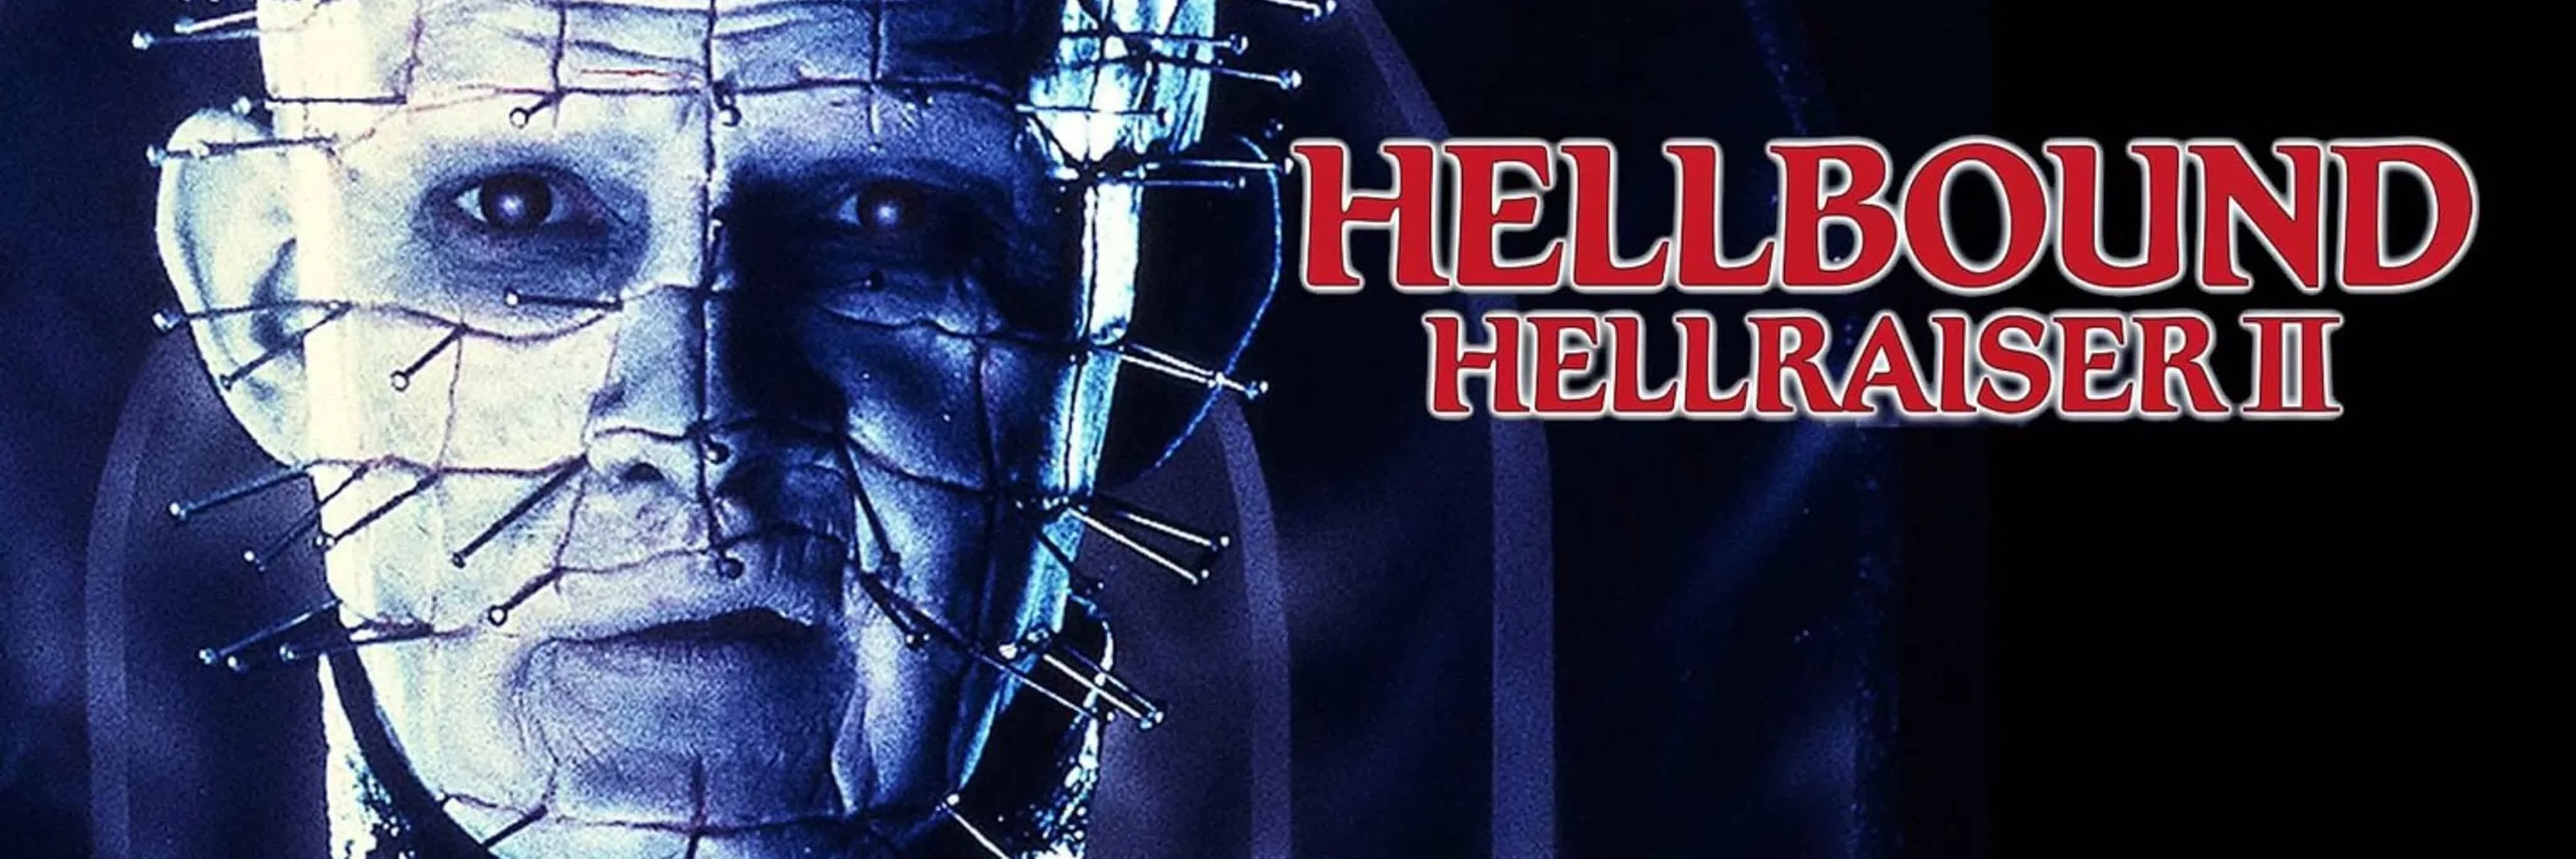 Hellbound: Hellraiser II 4K 1988 big poster